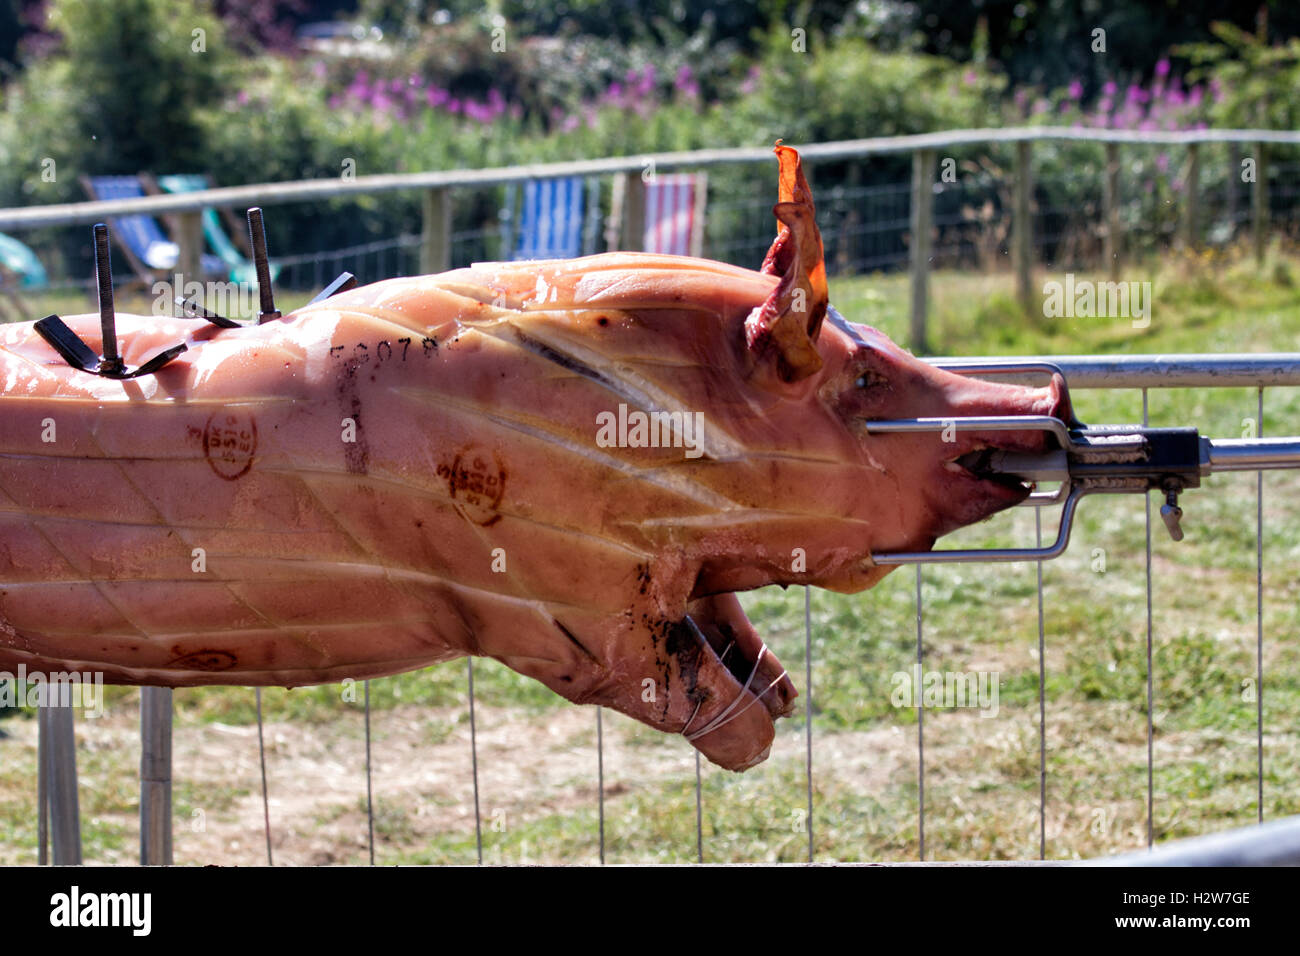 Pig roasting on a spit, Jimmy's Farm music festival, Ipswich, Suffolk, UK Stock Photo